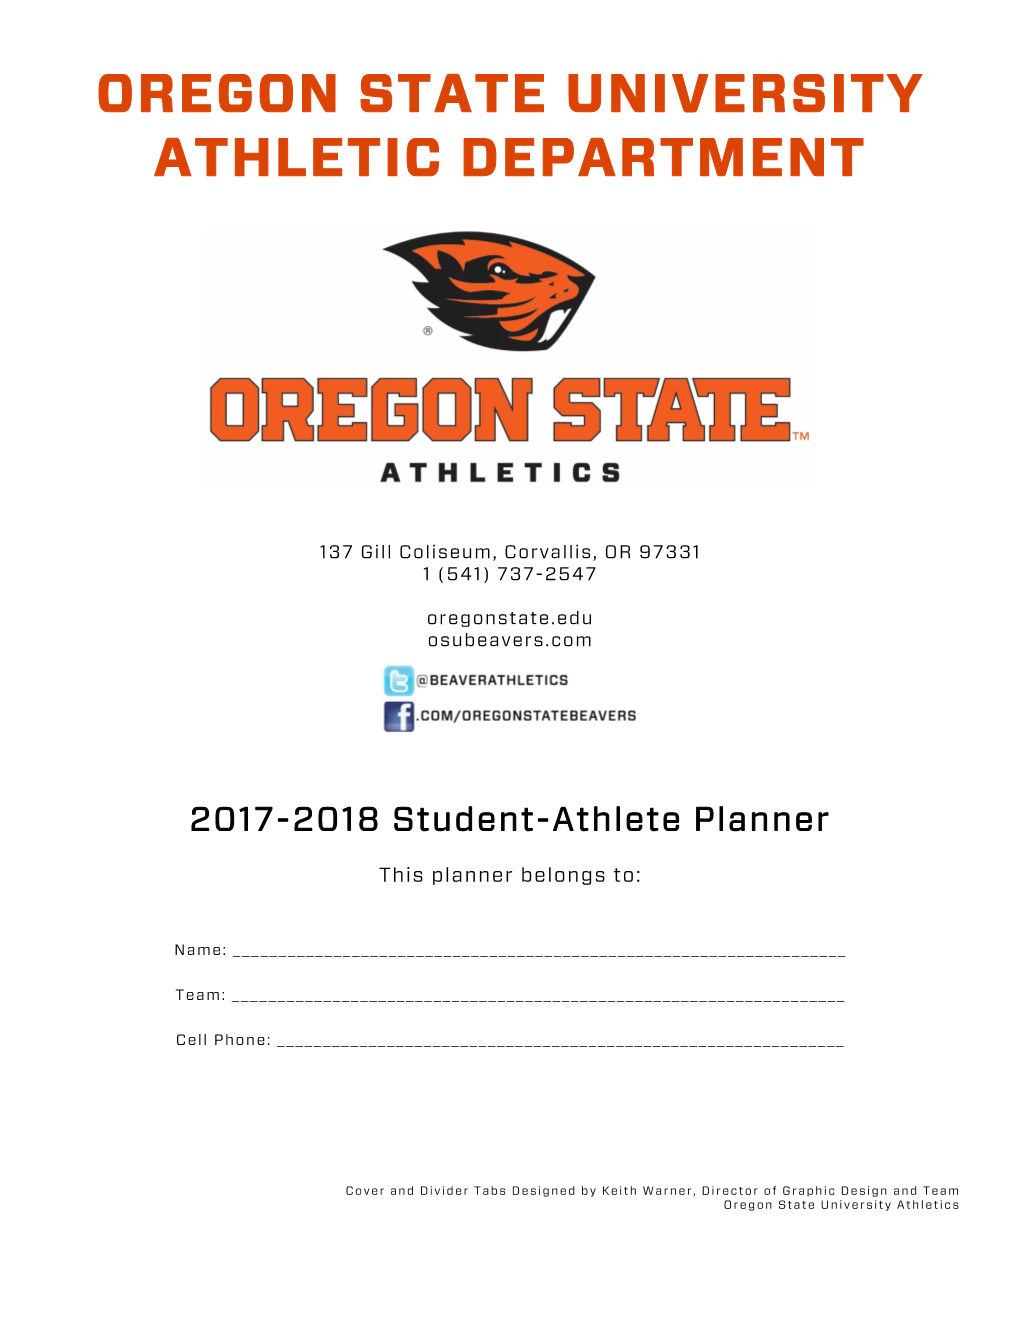 Oregon State University Athletic Department